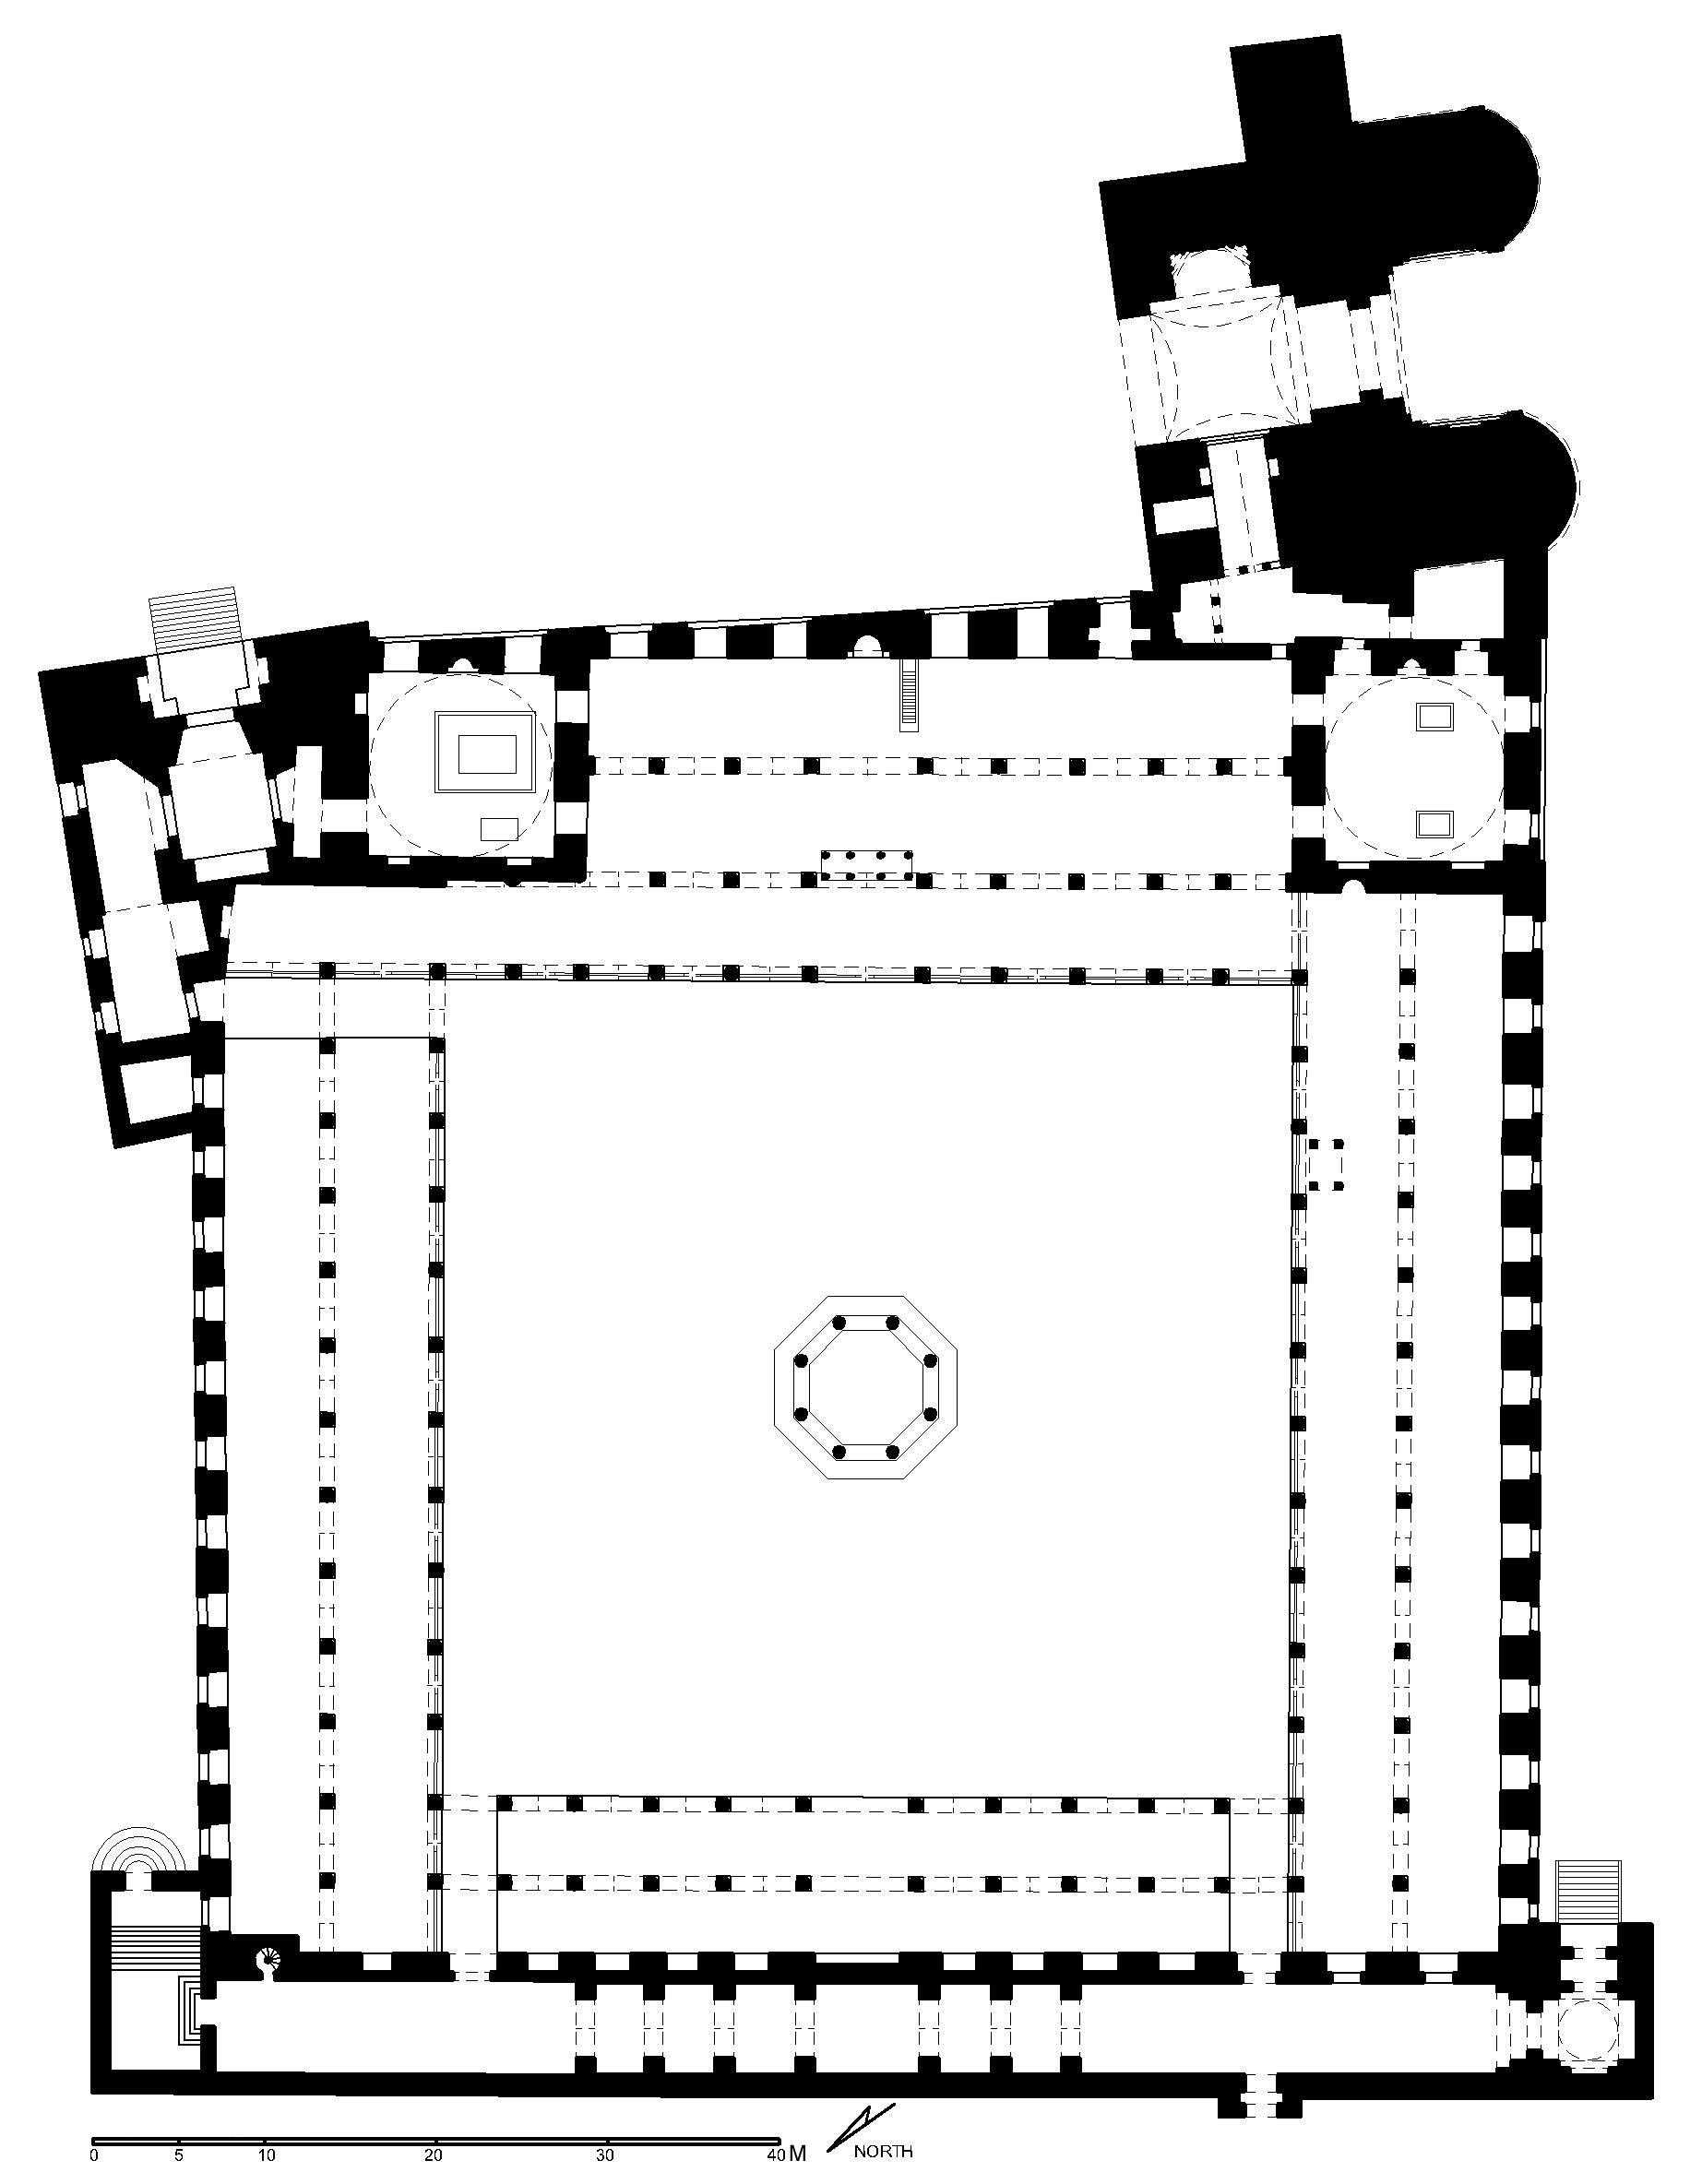 Reconstituted floor plan of Sultan al-Mu'ayyad Shaykh Complex, Cairo